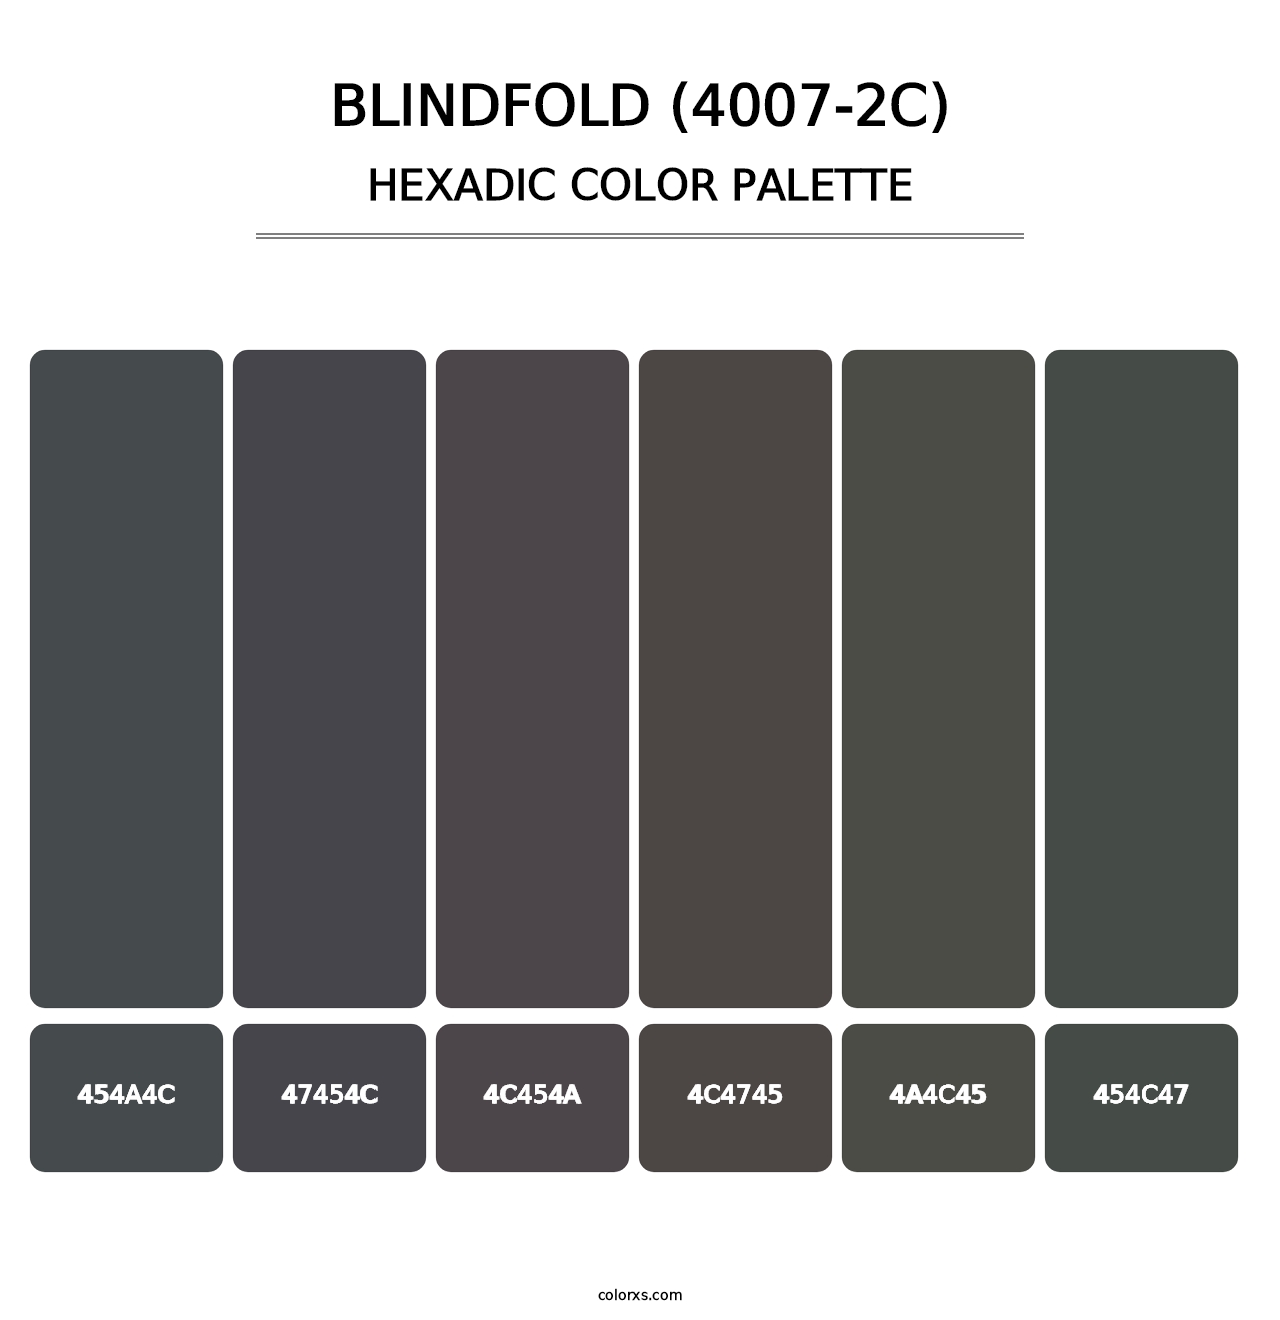 Blindfold (4007-2C) - Hexadic Color Palette